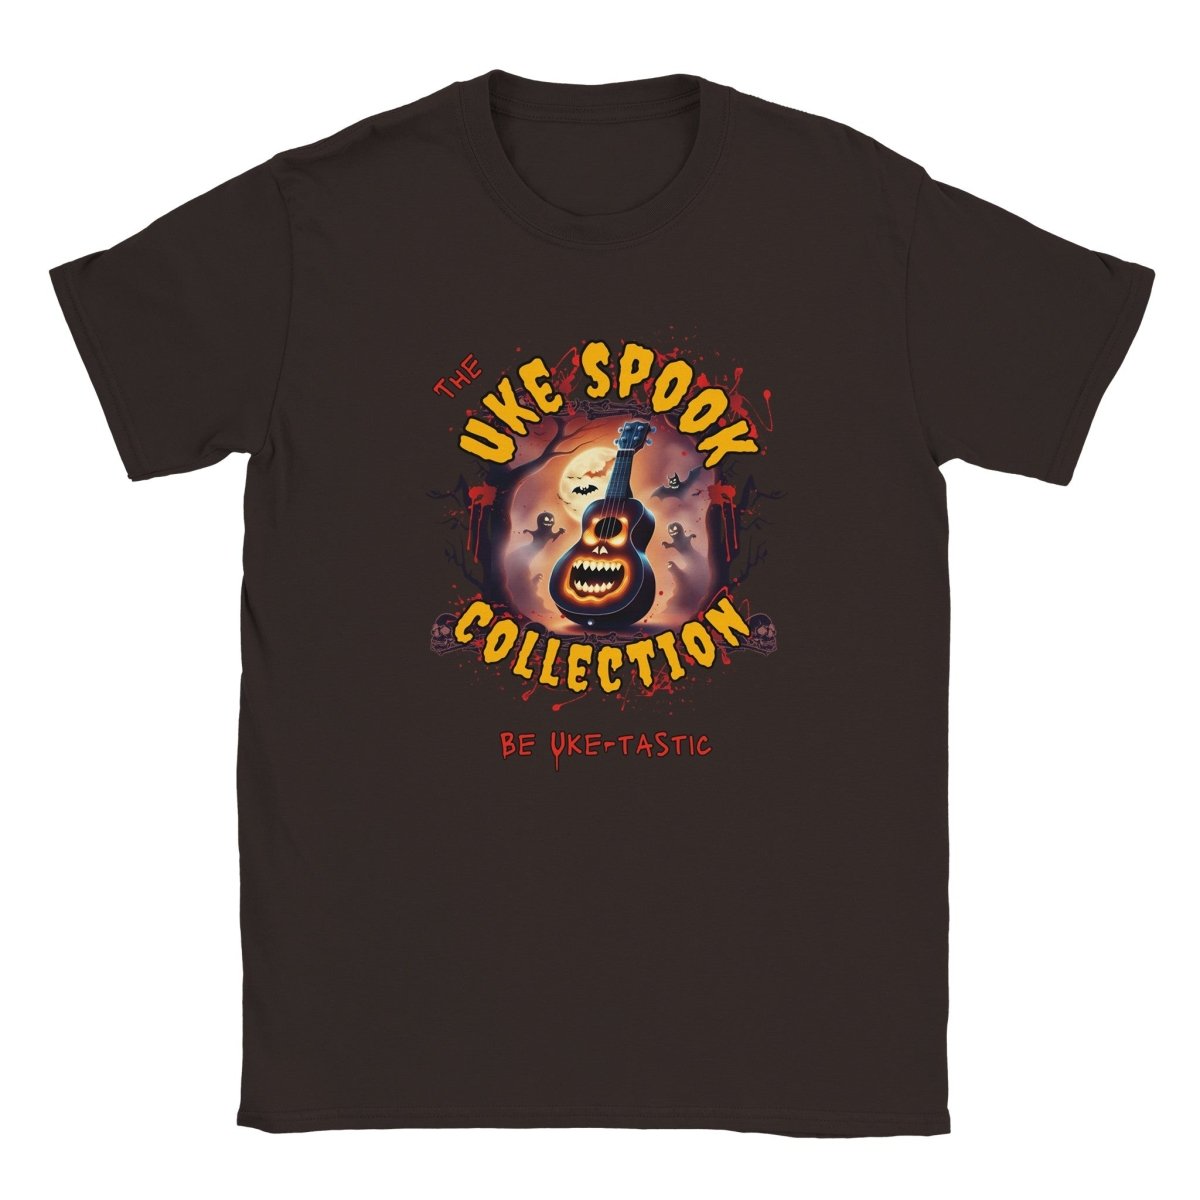 Uke Spook Pumpkin Face - Classic Unisex Crewneck T-shirt - Uke Tastic - Dark Chocolate - Free Delivery - Uke Tastic